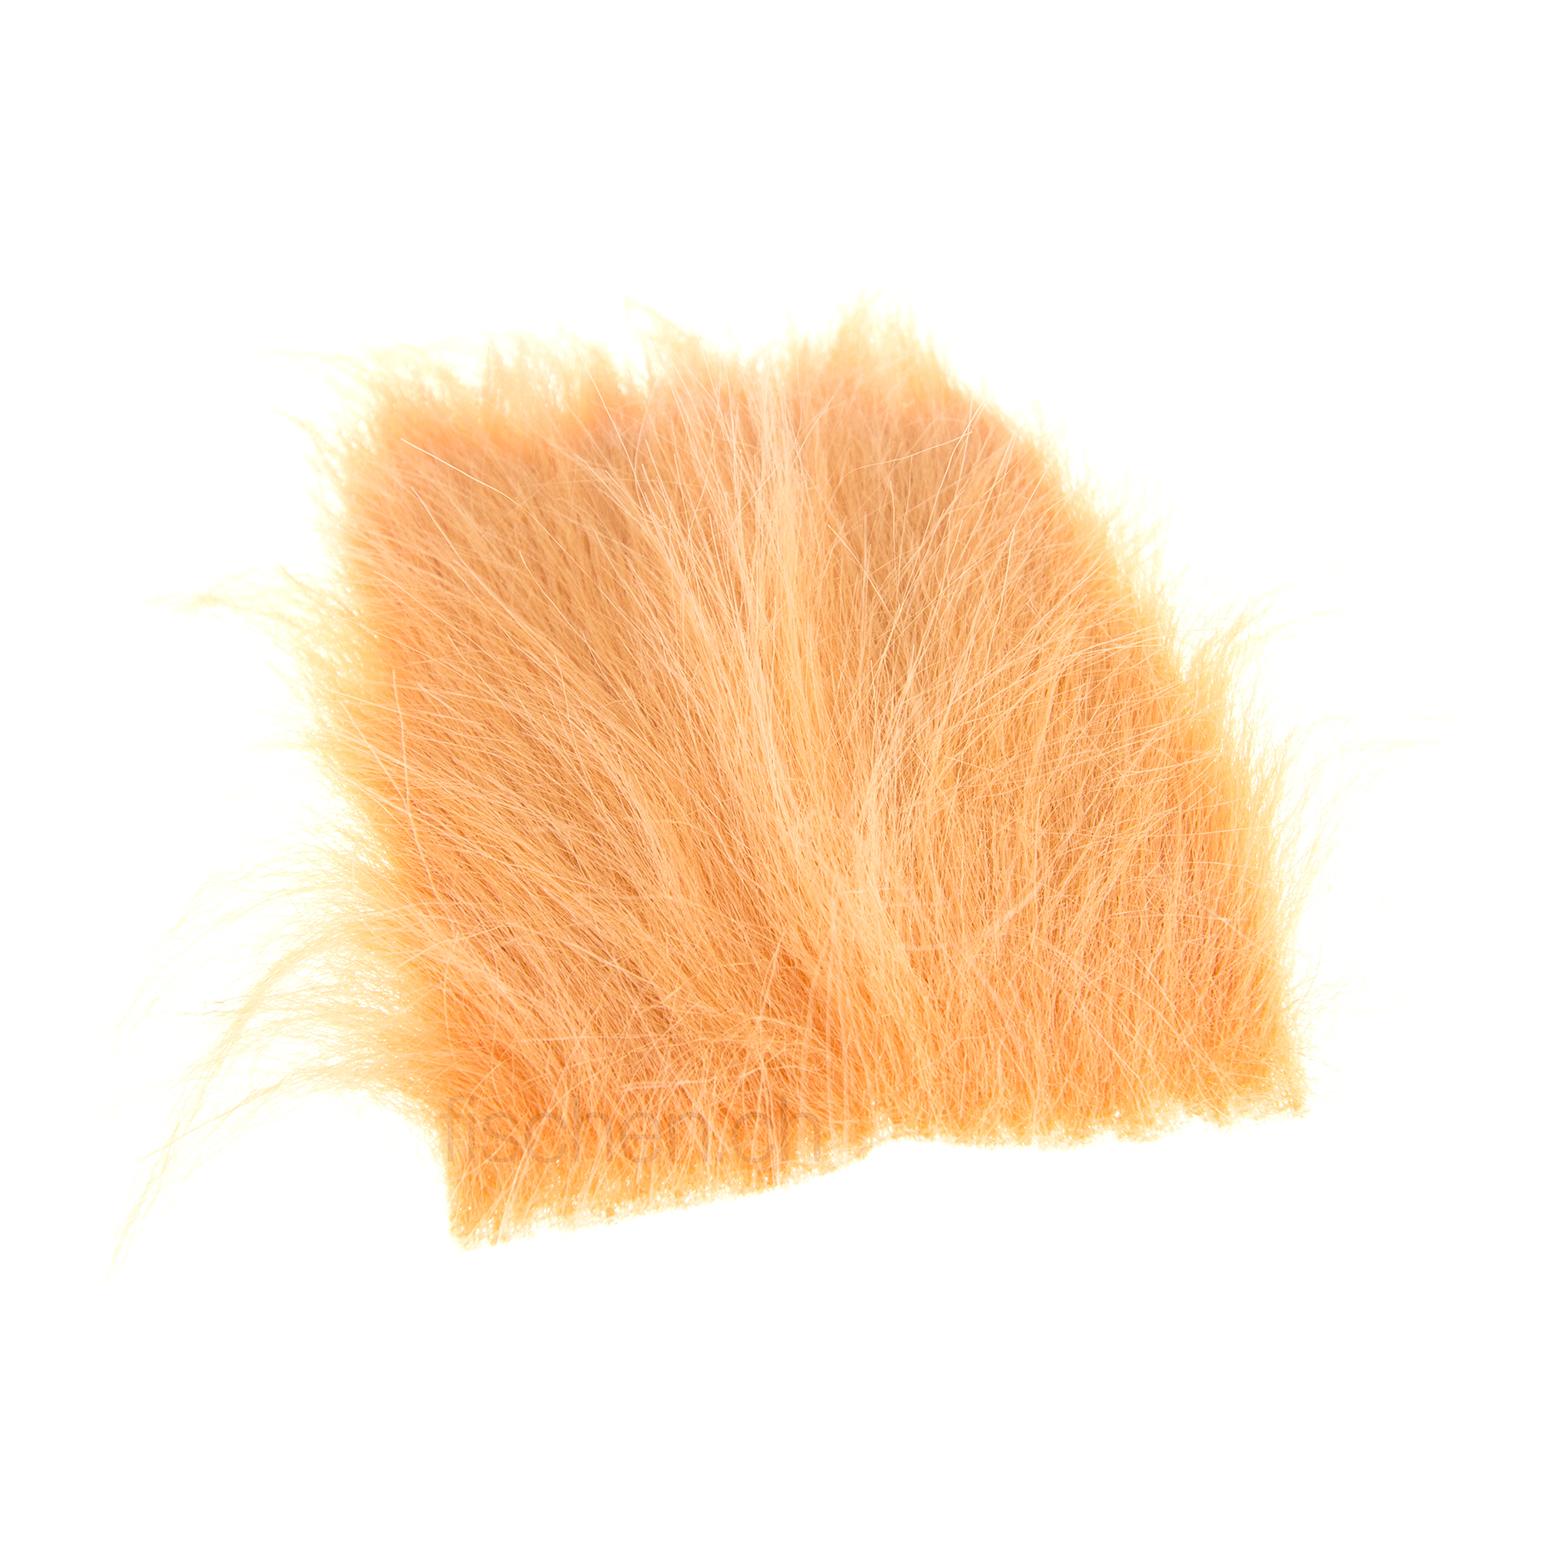 Image of Hareline Dubbin Extra Select Craft Fur - Cinnamon bei fischen.ch